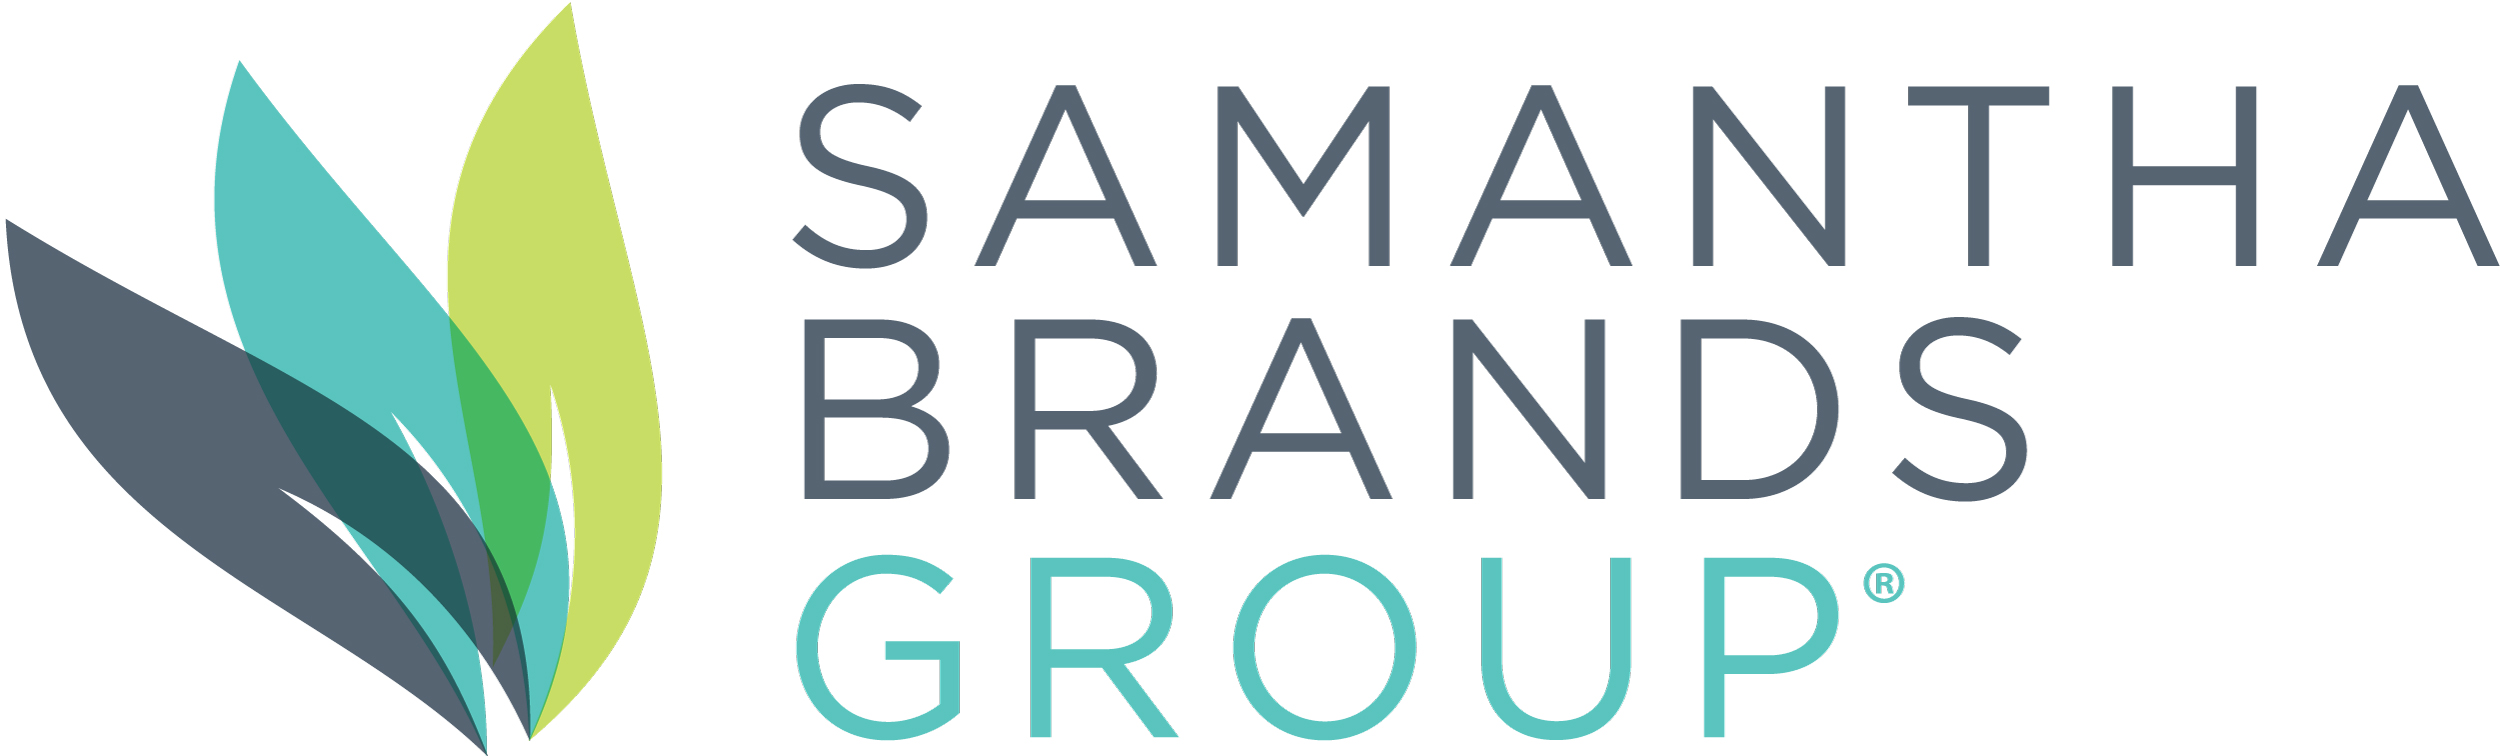 Samantha Brands Group